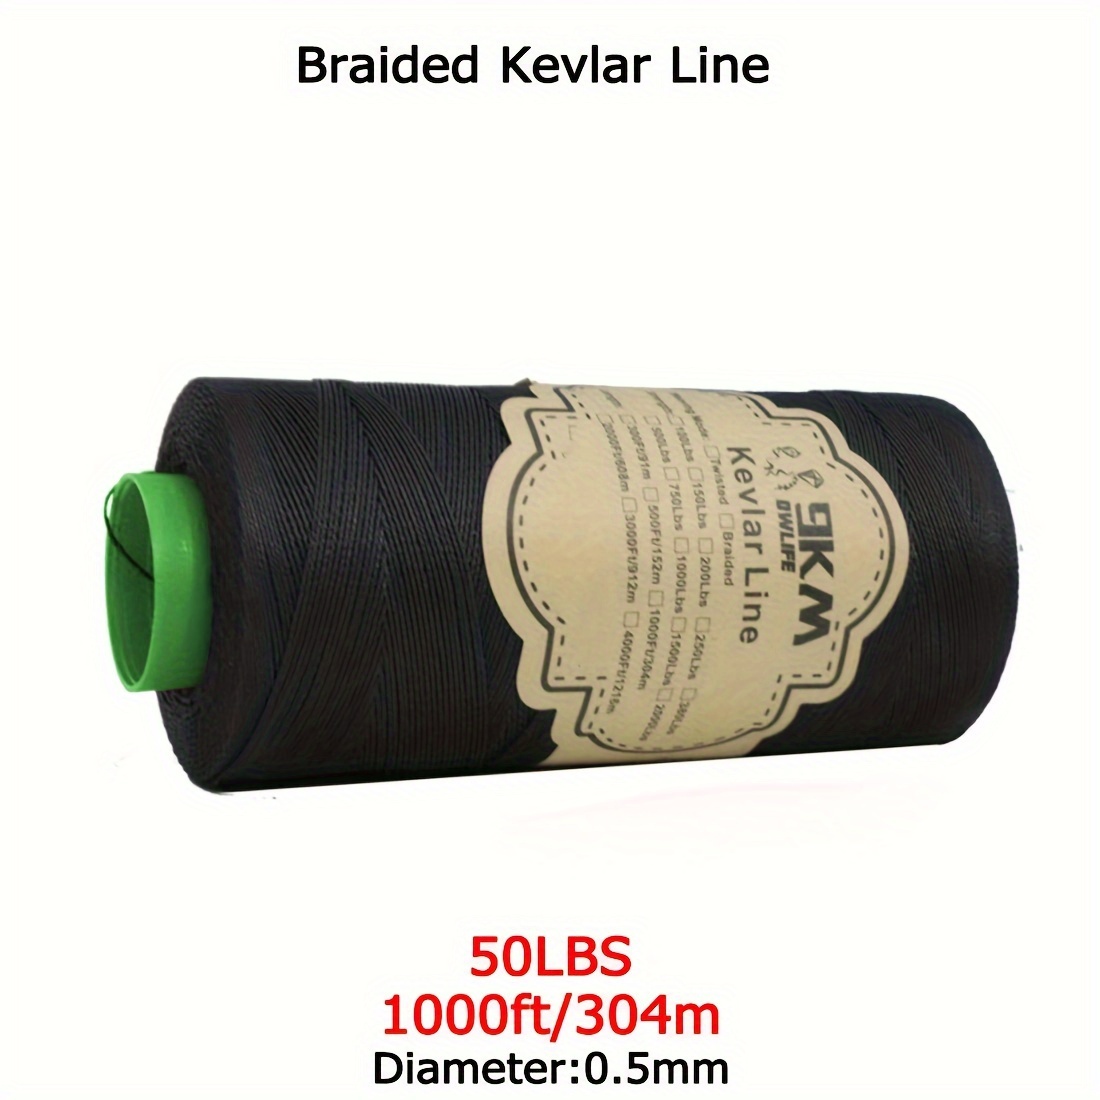 9km Braided Kevlar Line Black 50 1500 Lbs Fishing Assist - Temu